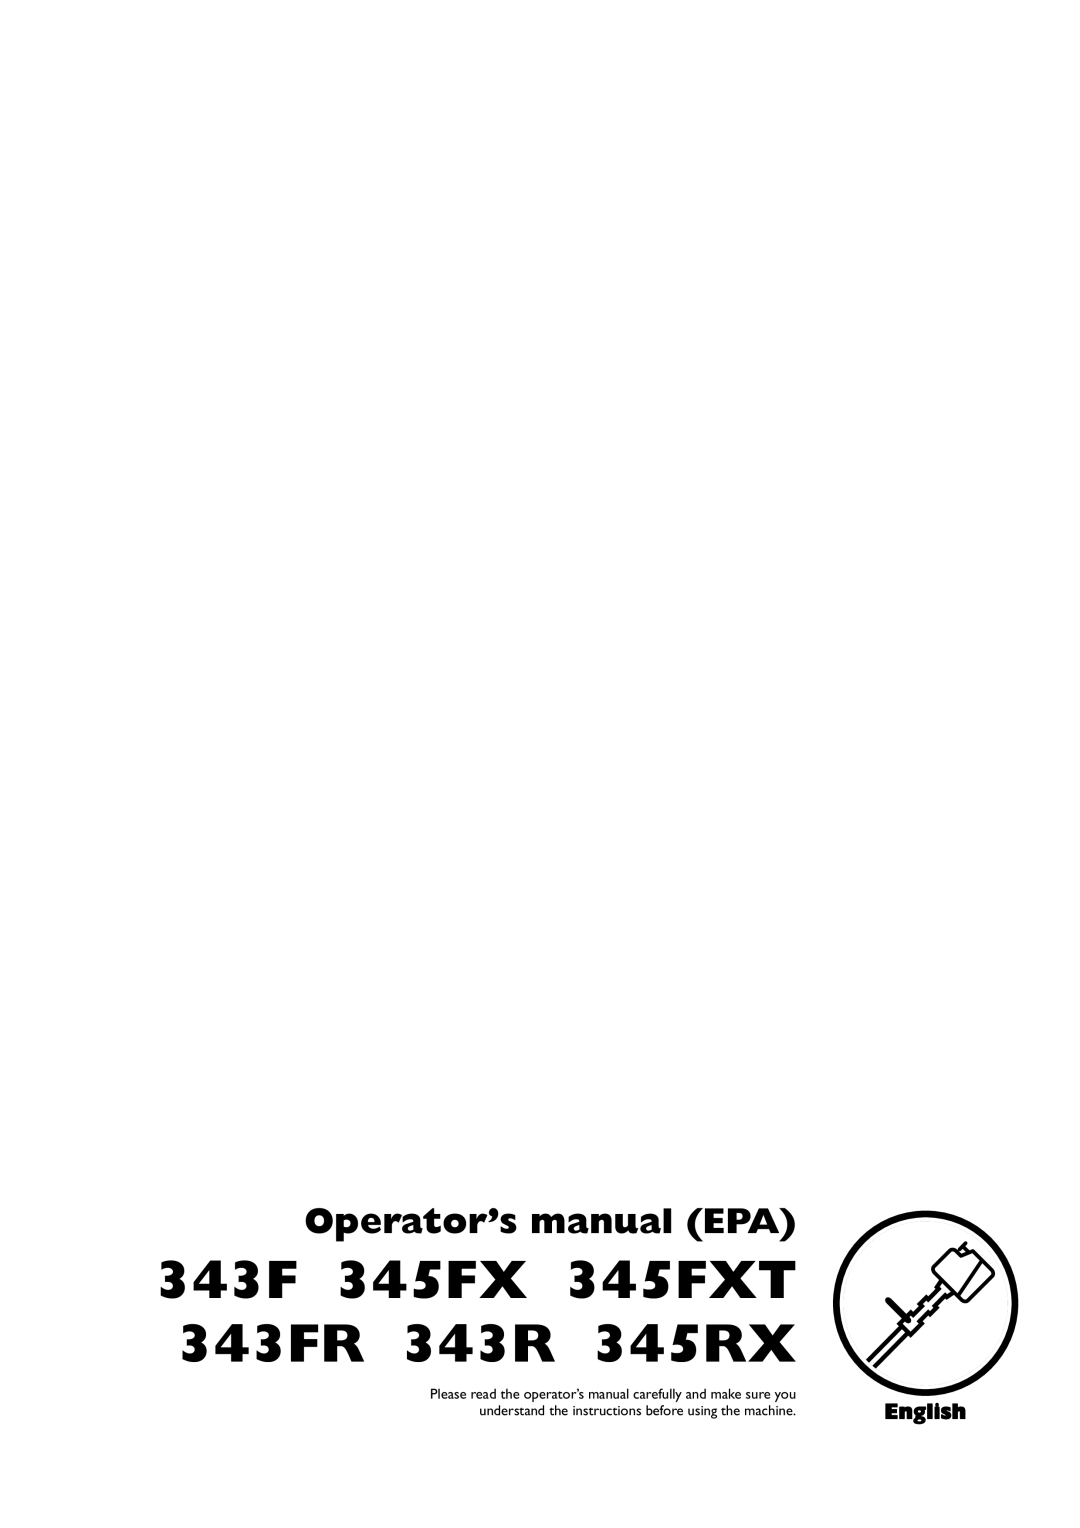 Husqvarna manual 343F 345FX 345FXT 343FR 343R 345RX, Operator’s manual EPA, English 